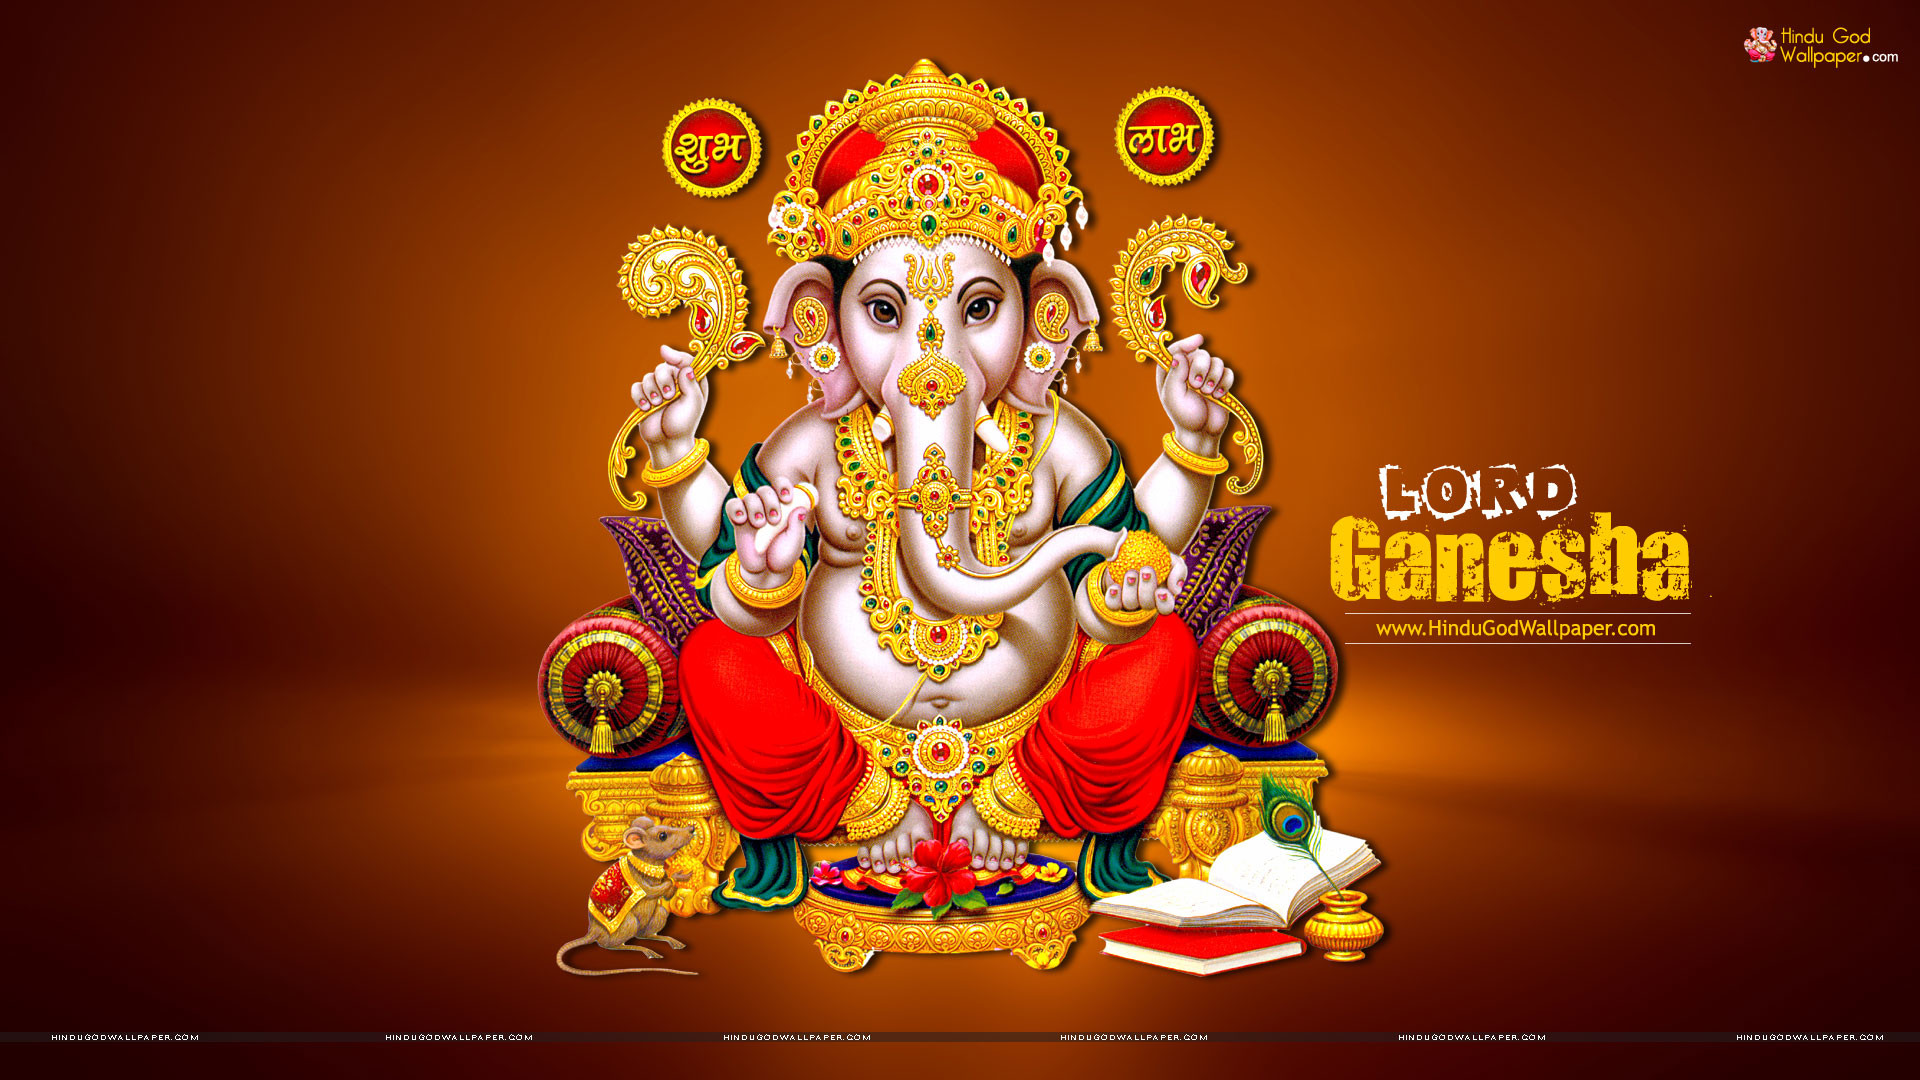 Data-src - Hindu God Images Hd Ganesha - 1920x1080 Wallpaper 